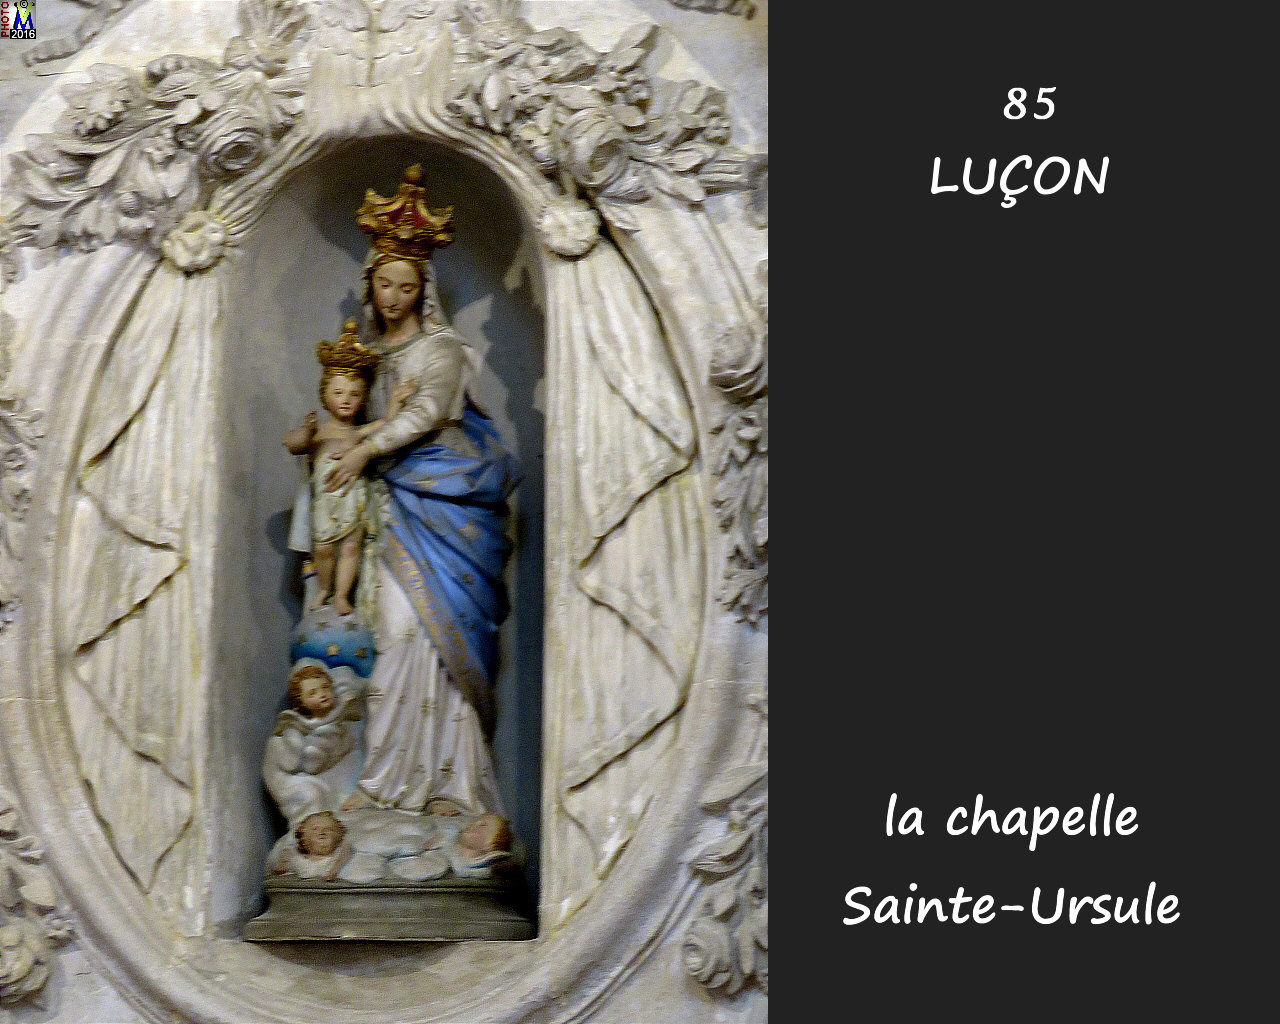 85LUCON_chapelle-ursule_1236.jpg